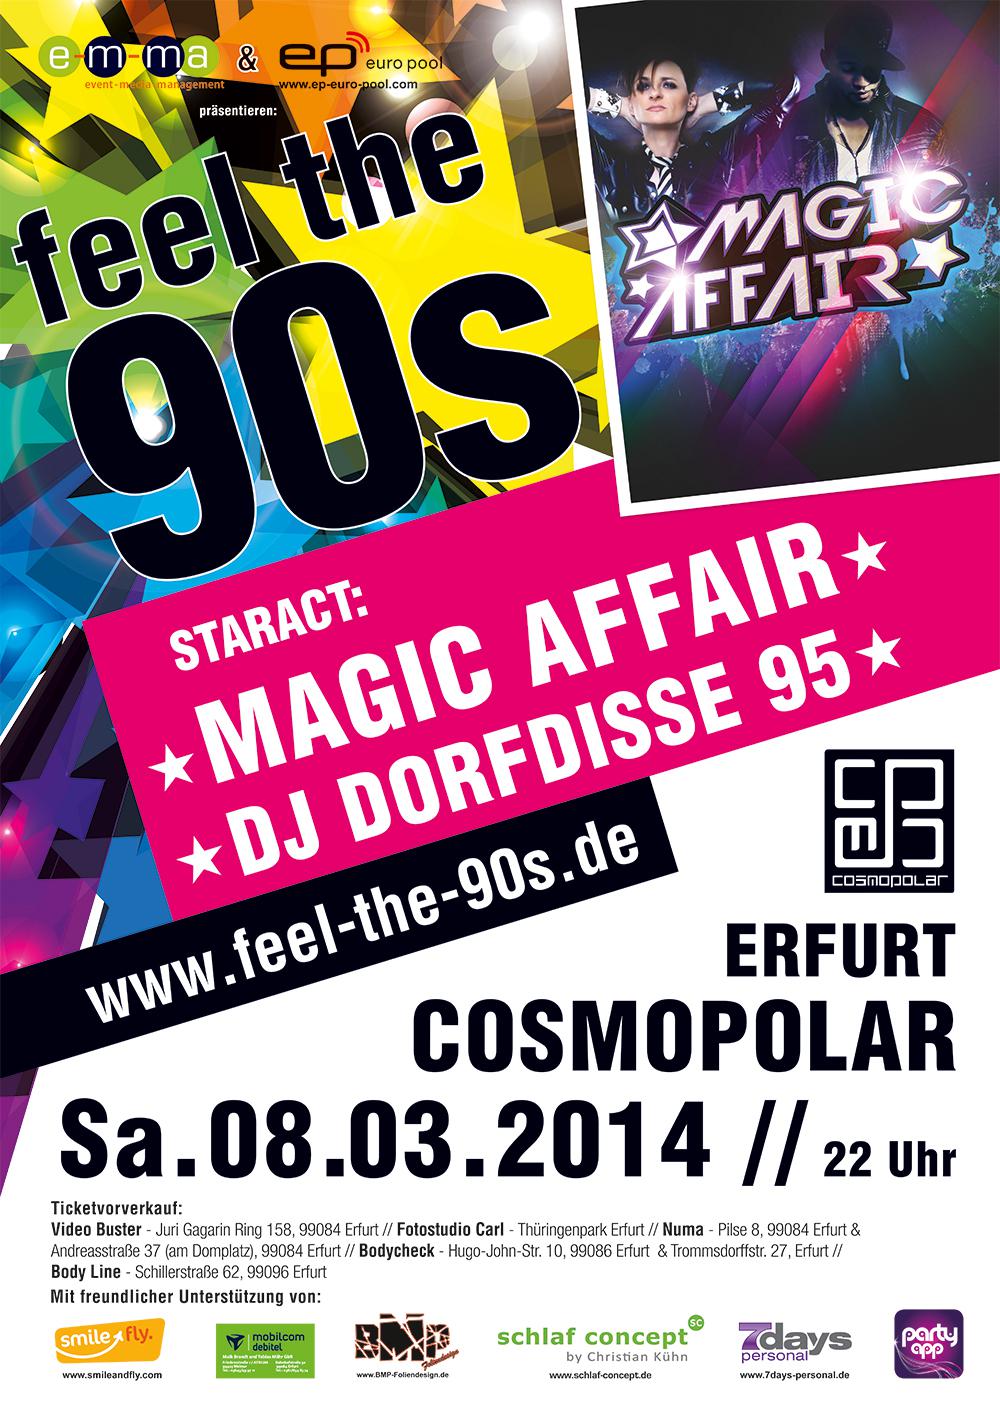 FEEL THE 90s - Staract: MAGIC AFFAIR & DJ Dorfdisse 95